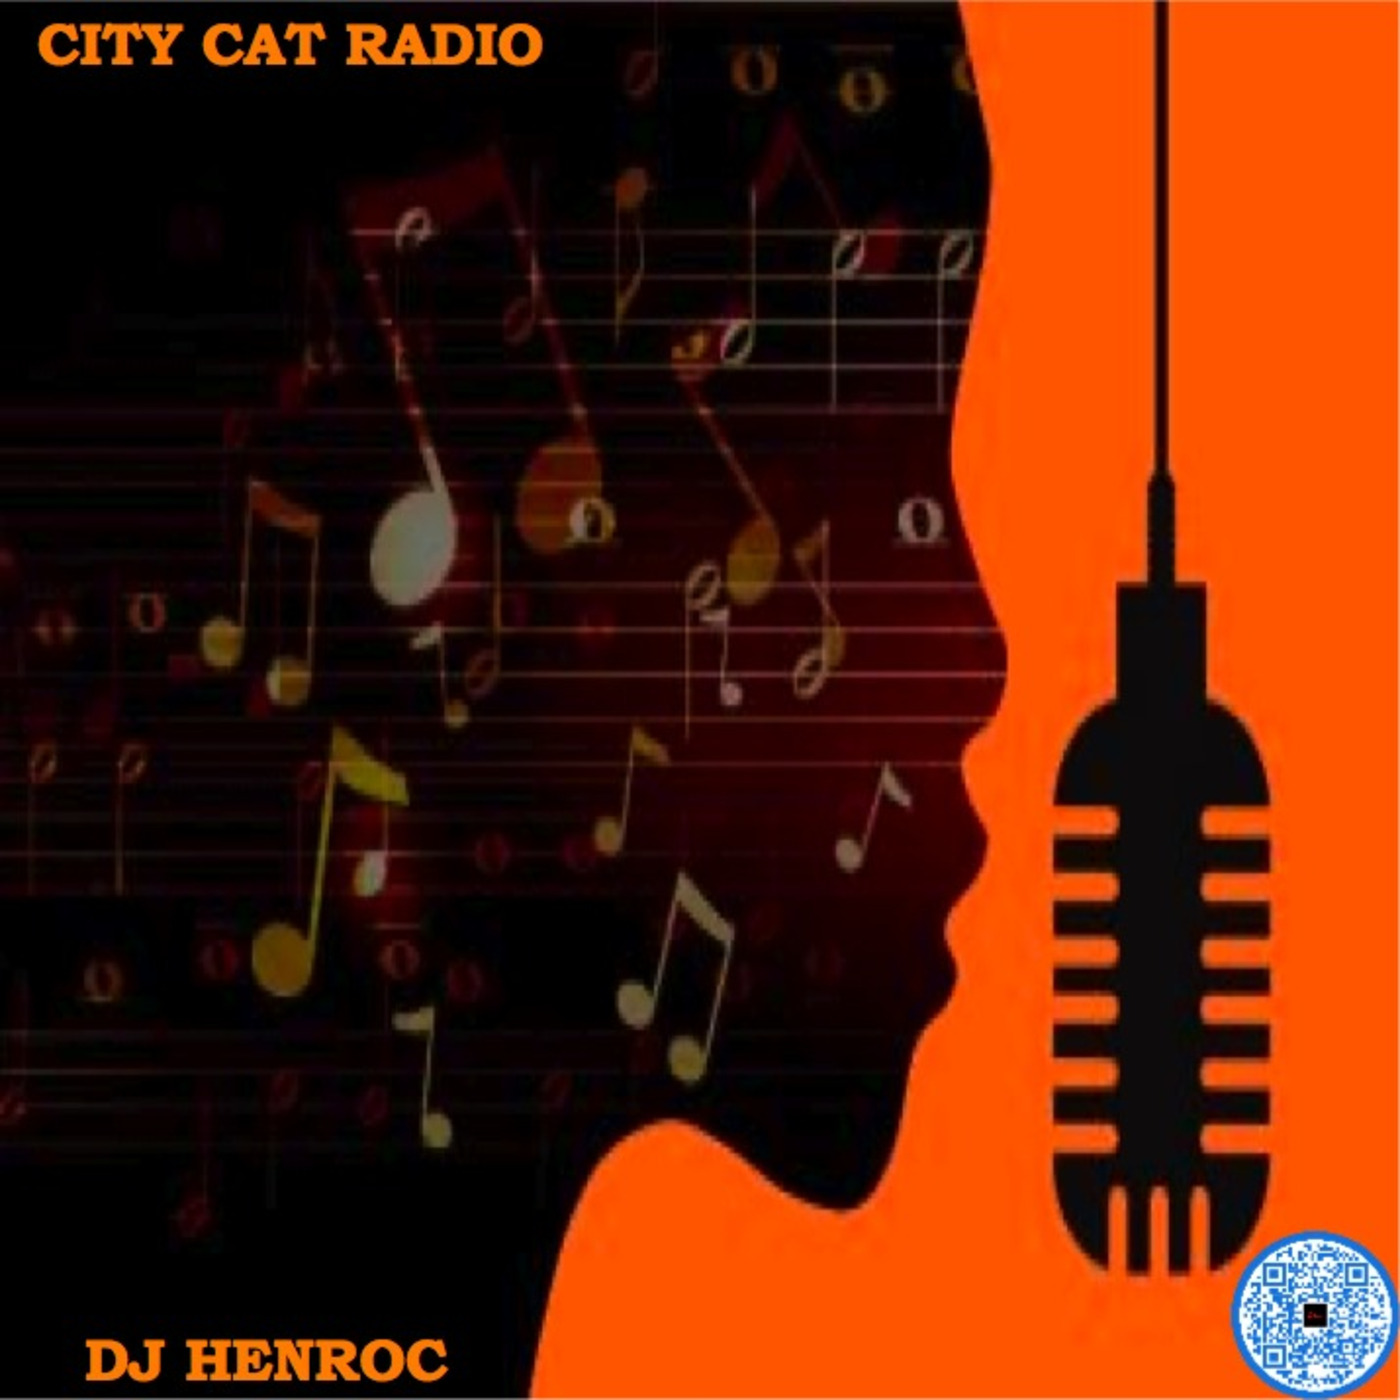 Episode 325: CITY CAT RADIO THURSDAYS ---> URBAN SOUL